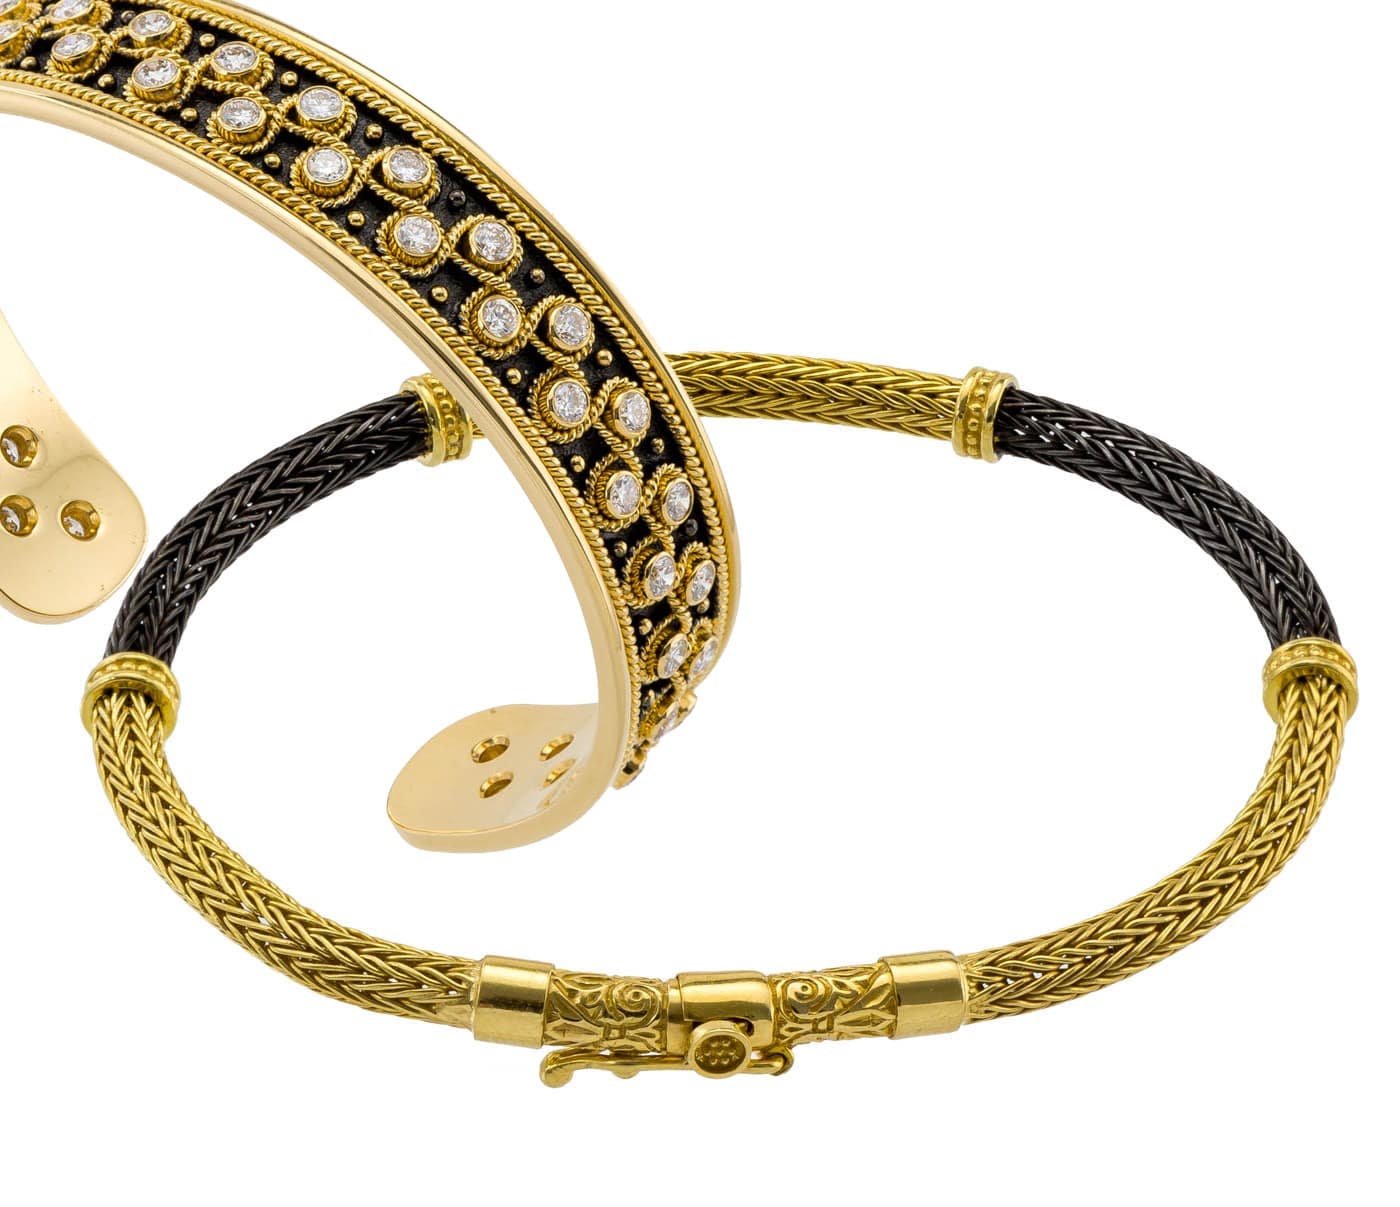 shop online greek byzantine bracelets gold with diamonds